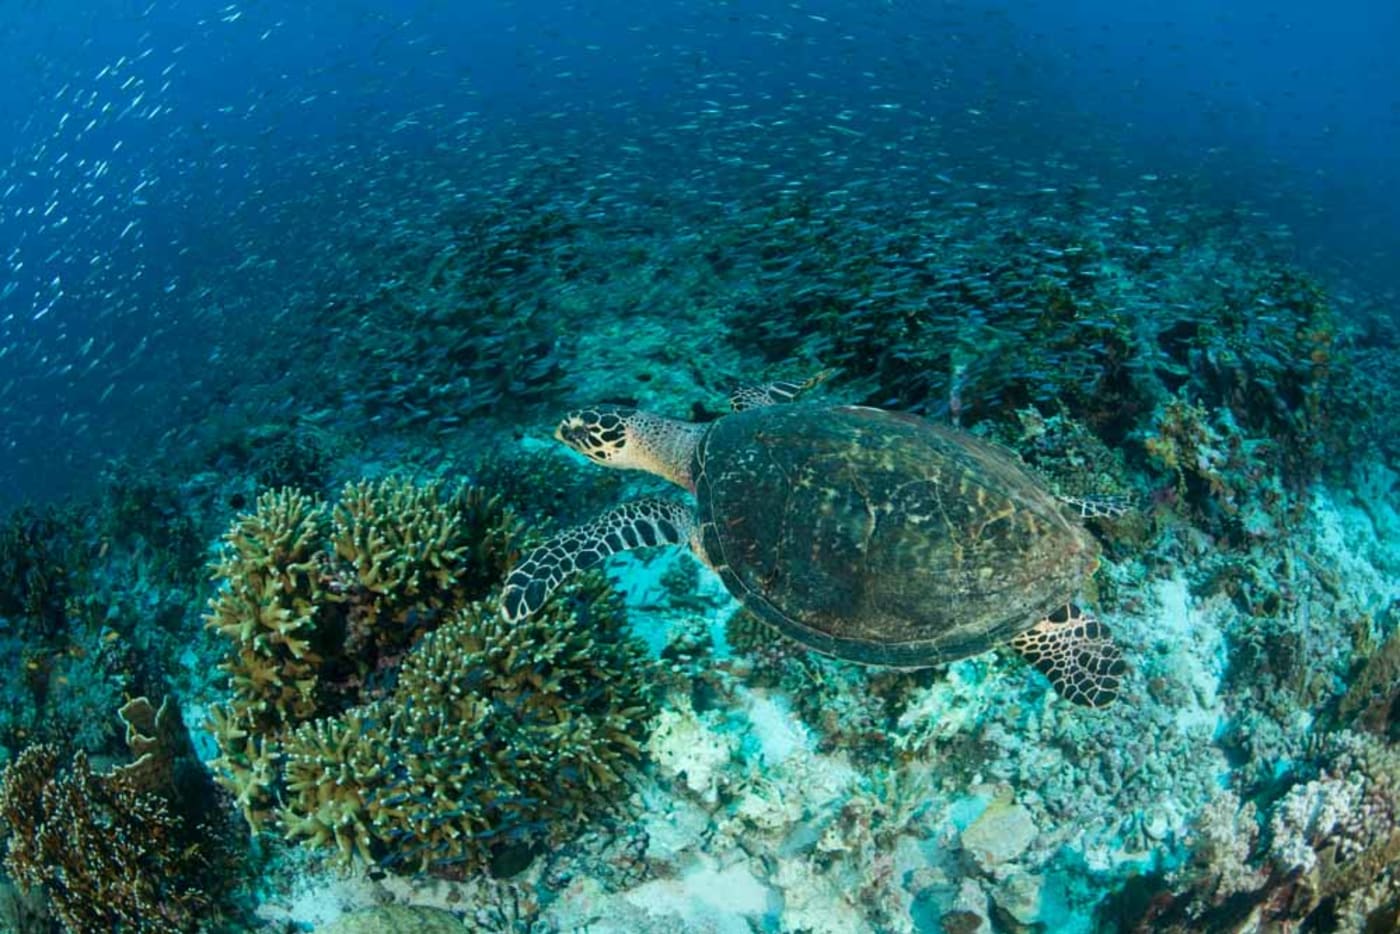 A hawksbill turtle swimming through a reef= Banda Neira= Indonesia